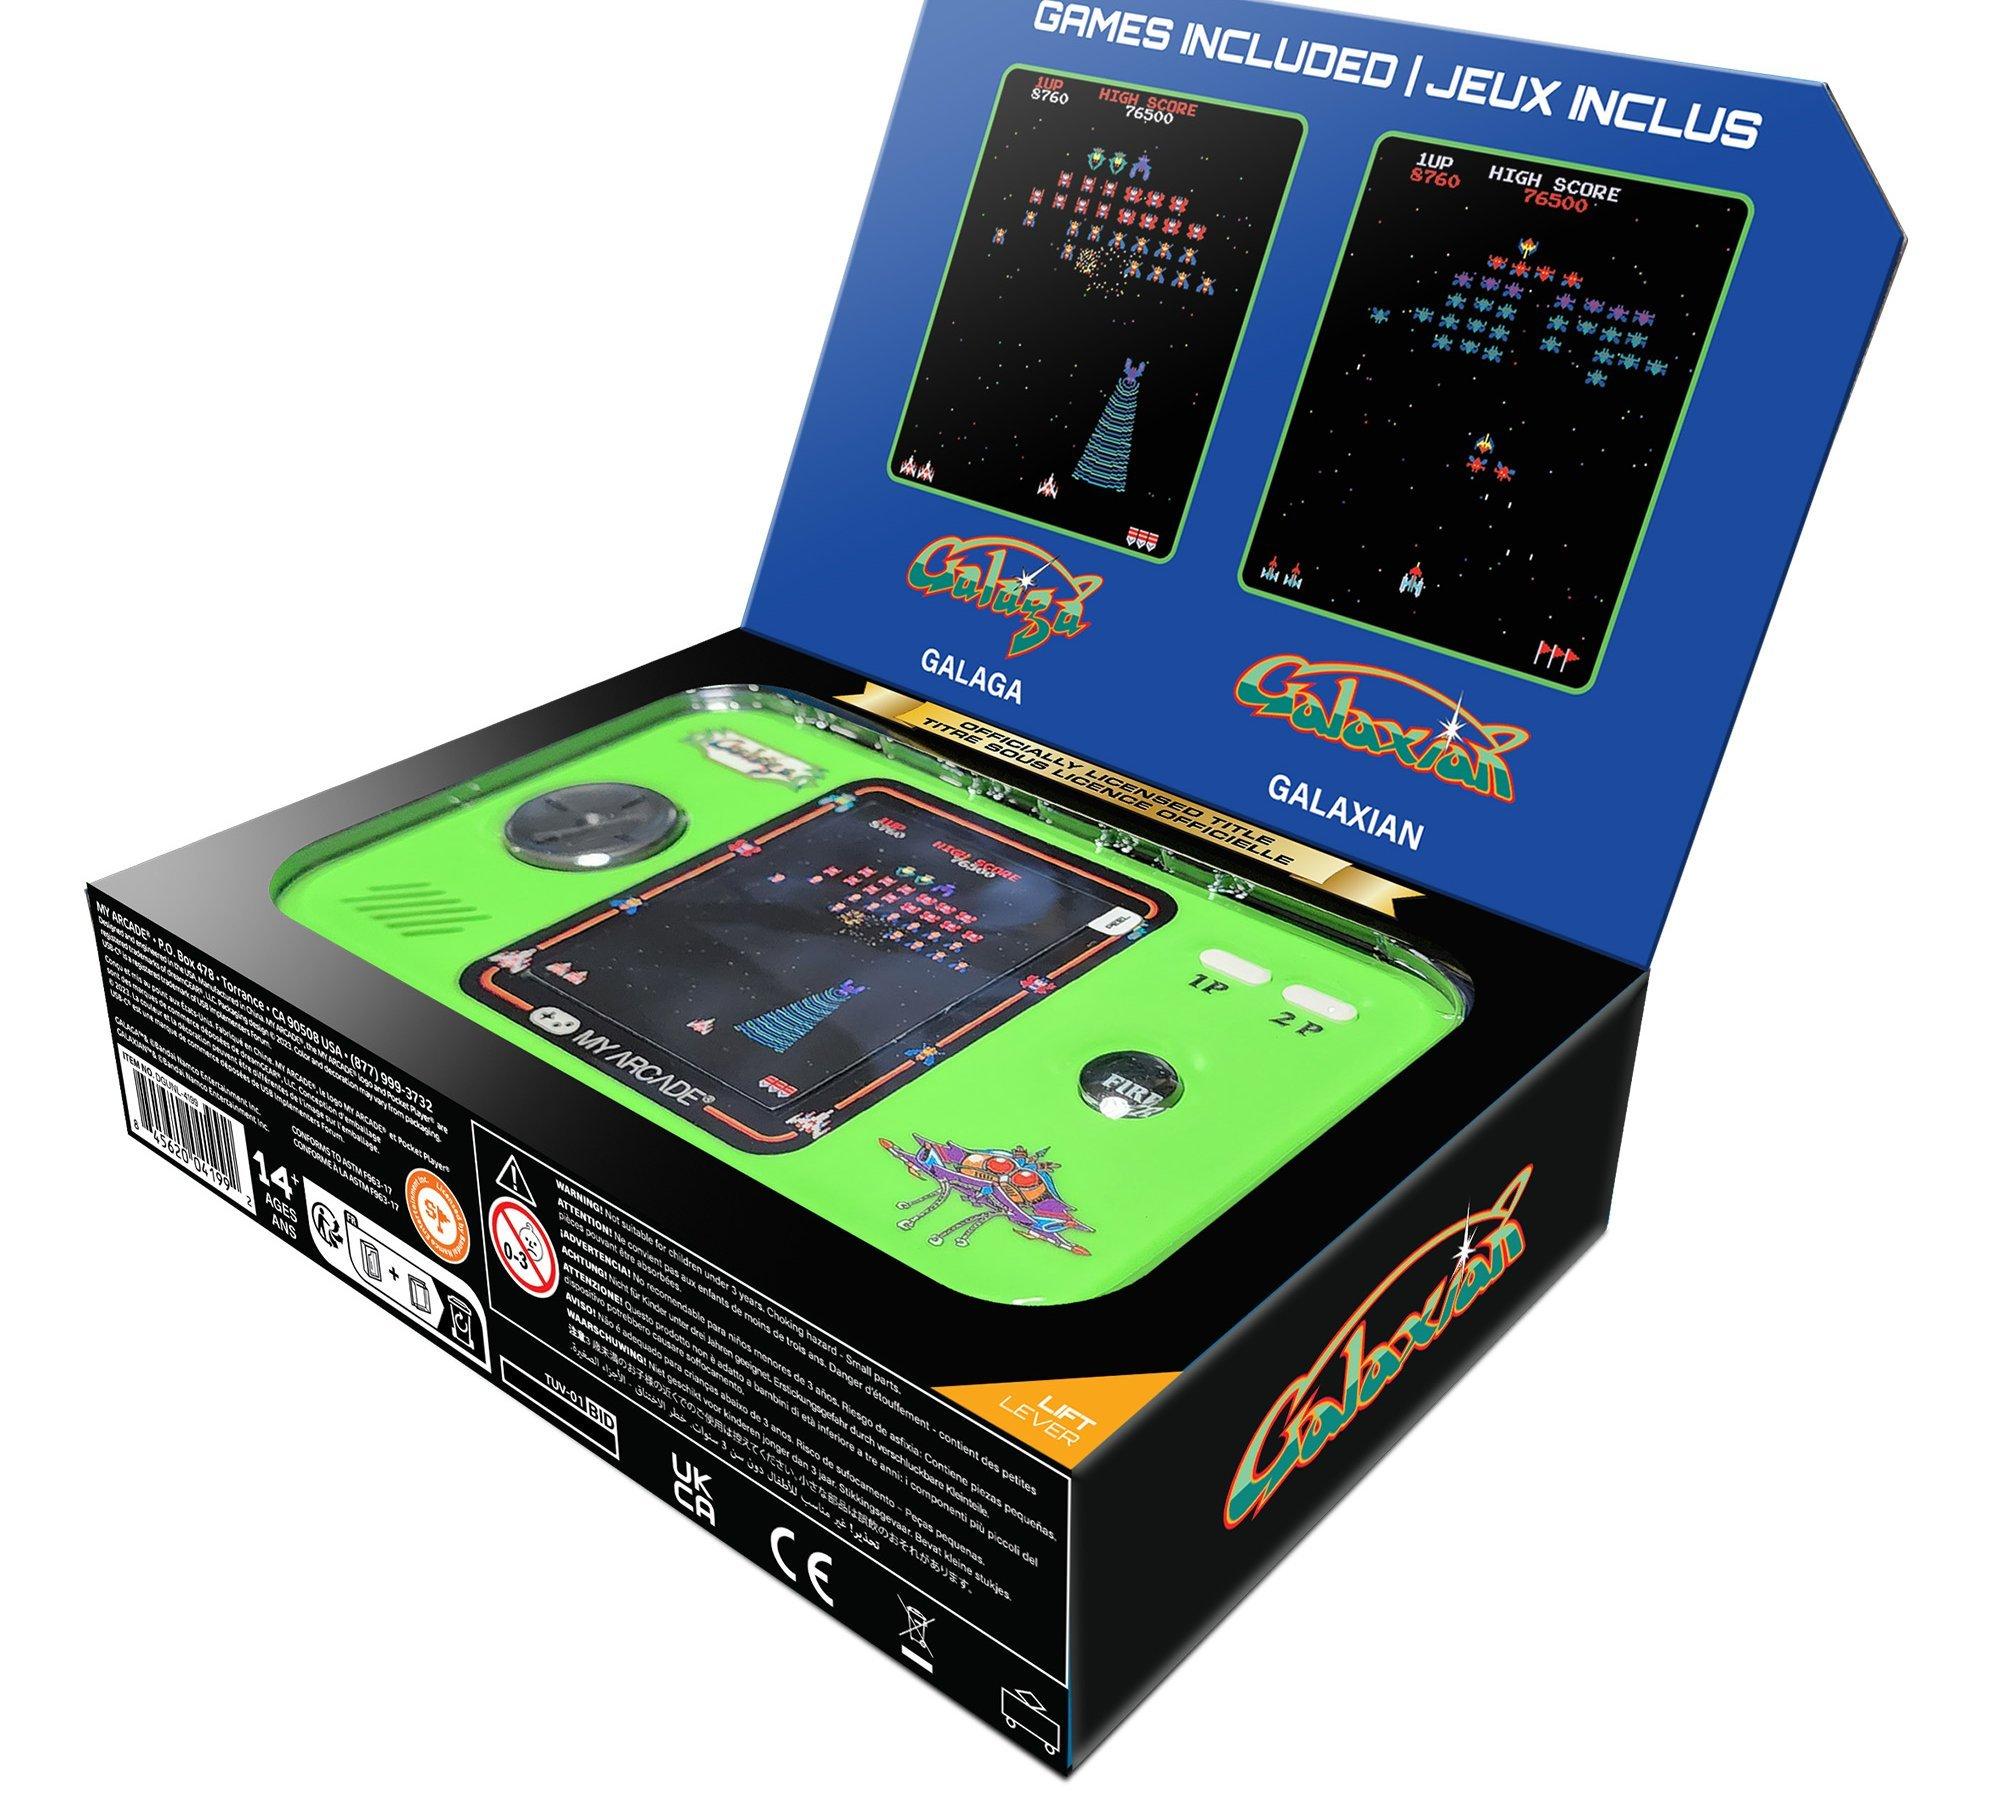 My Arcade Galaga Pocket Player PRO Handheld Portable Video Game System